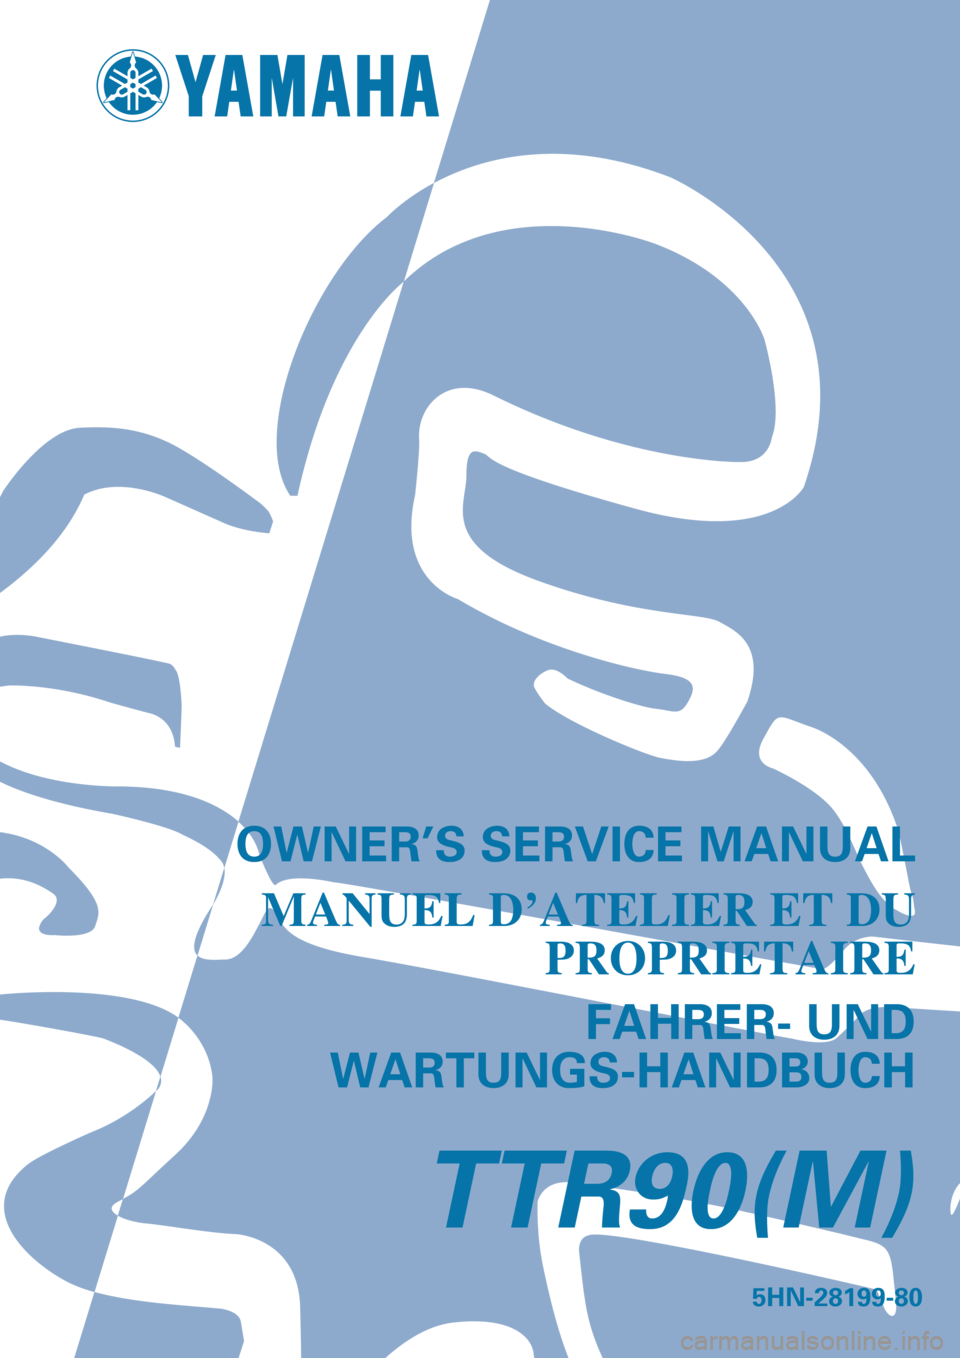 YAMAHA TTR90 2000  Owners Manual    
 
 
  
5HN-28199-80
TTR90(M)
OWNER’S SERVICE MANUAL
MANUEL D’ATELIER ET DU
PROPRIETAIRE
FAHRER- UND
WARTUNGS-HANDBUCH 